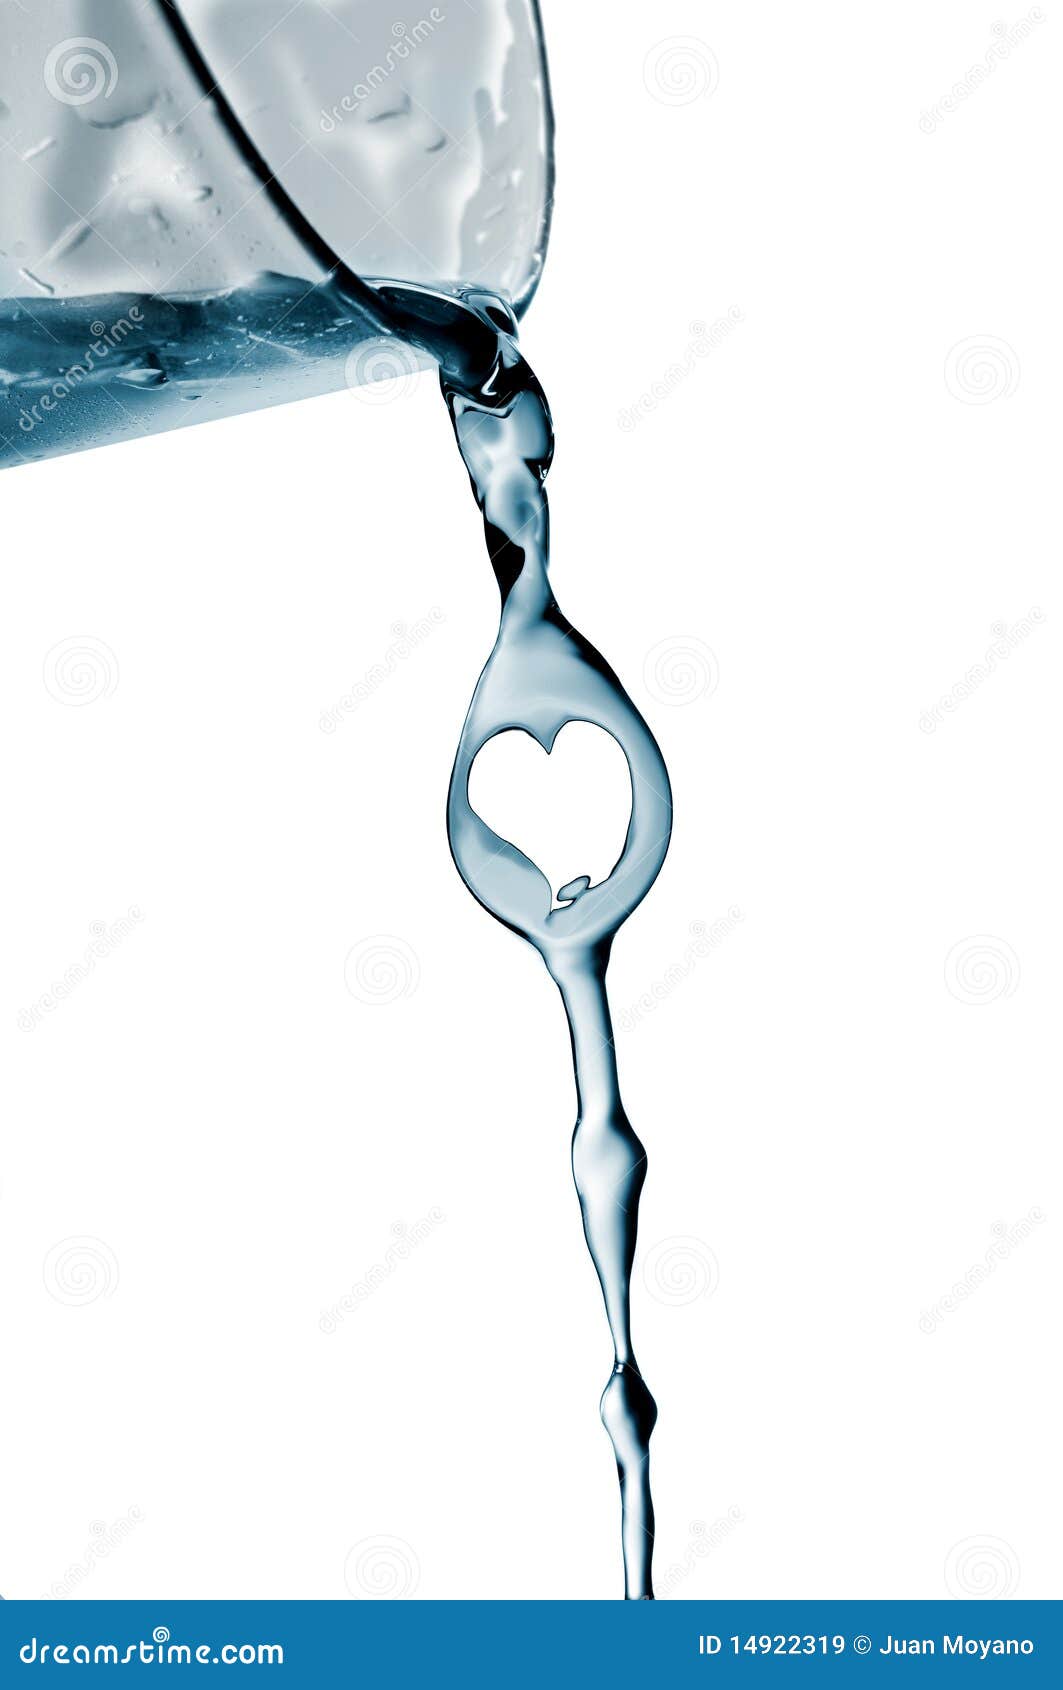 heart splash water